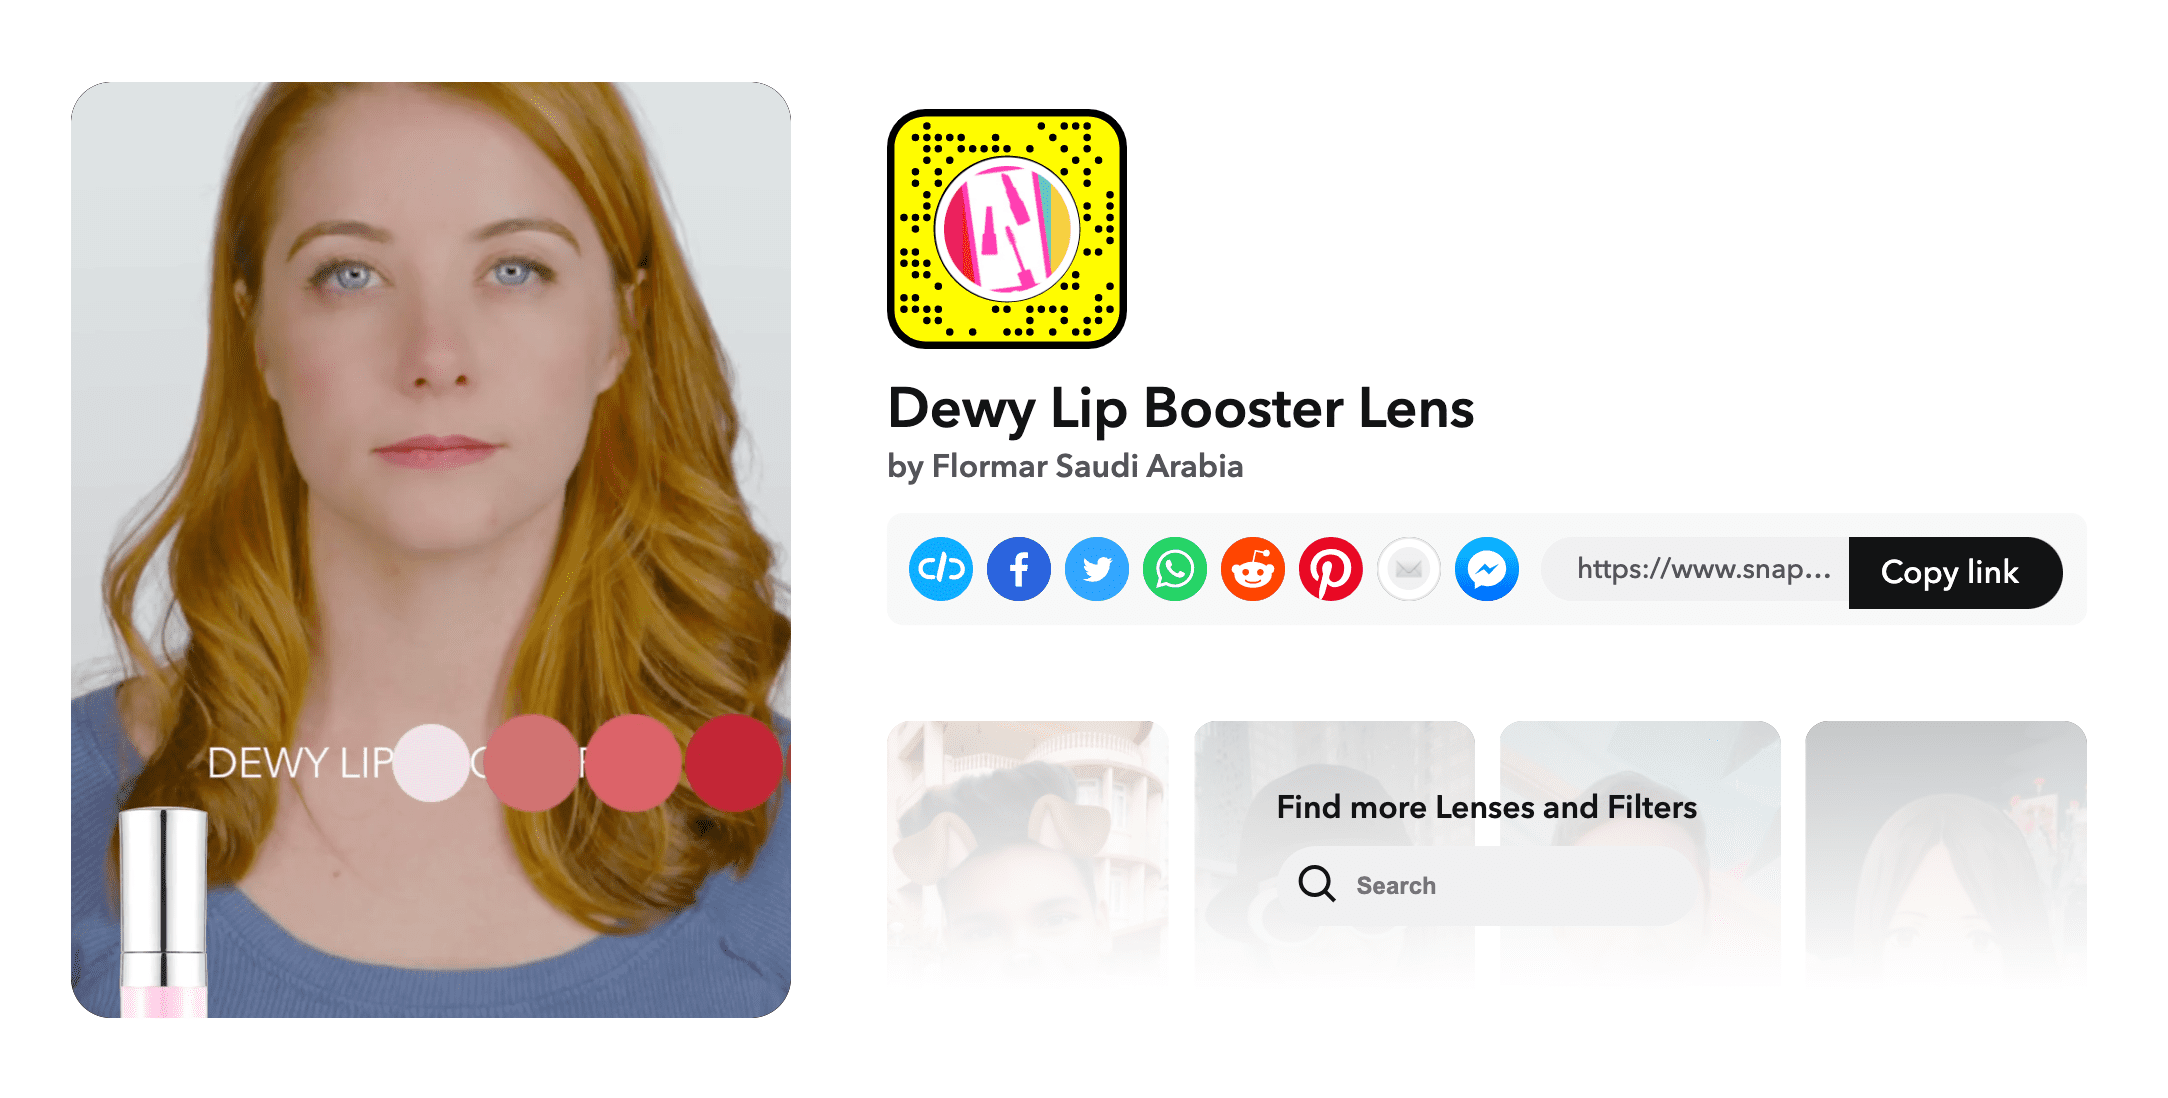 Dewy Lip Booster